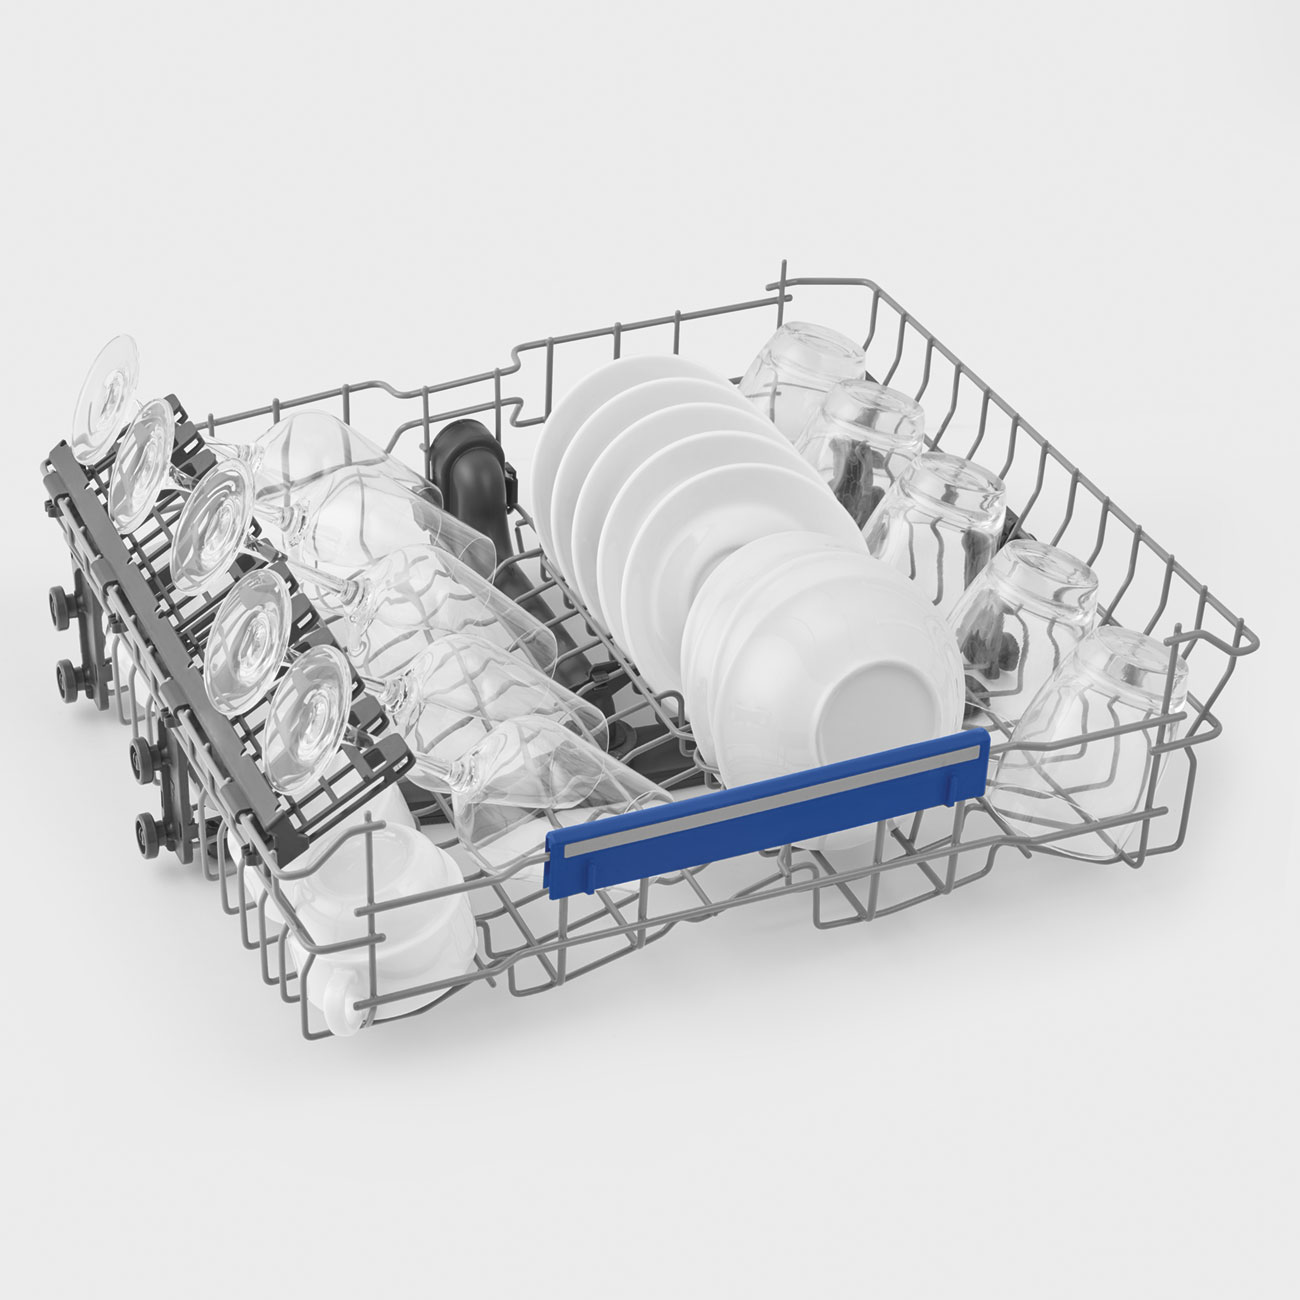  dishwasher 60 cm Smeg_2